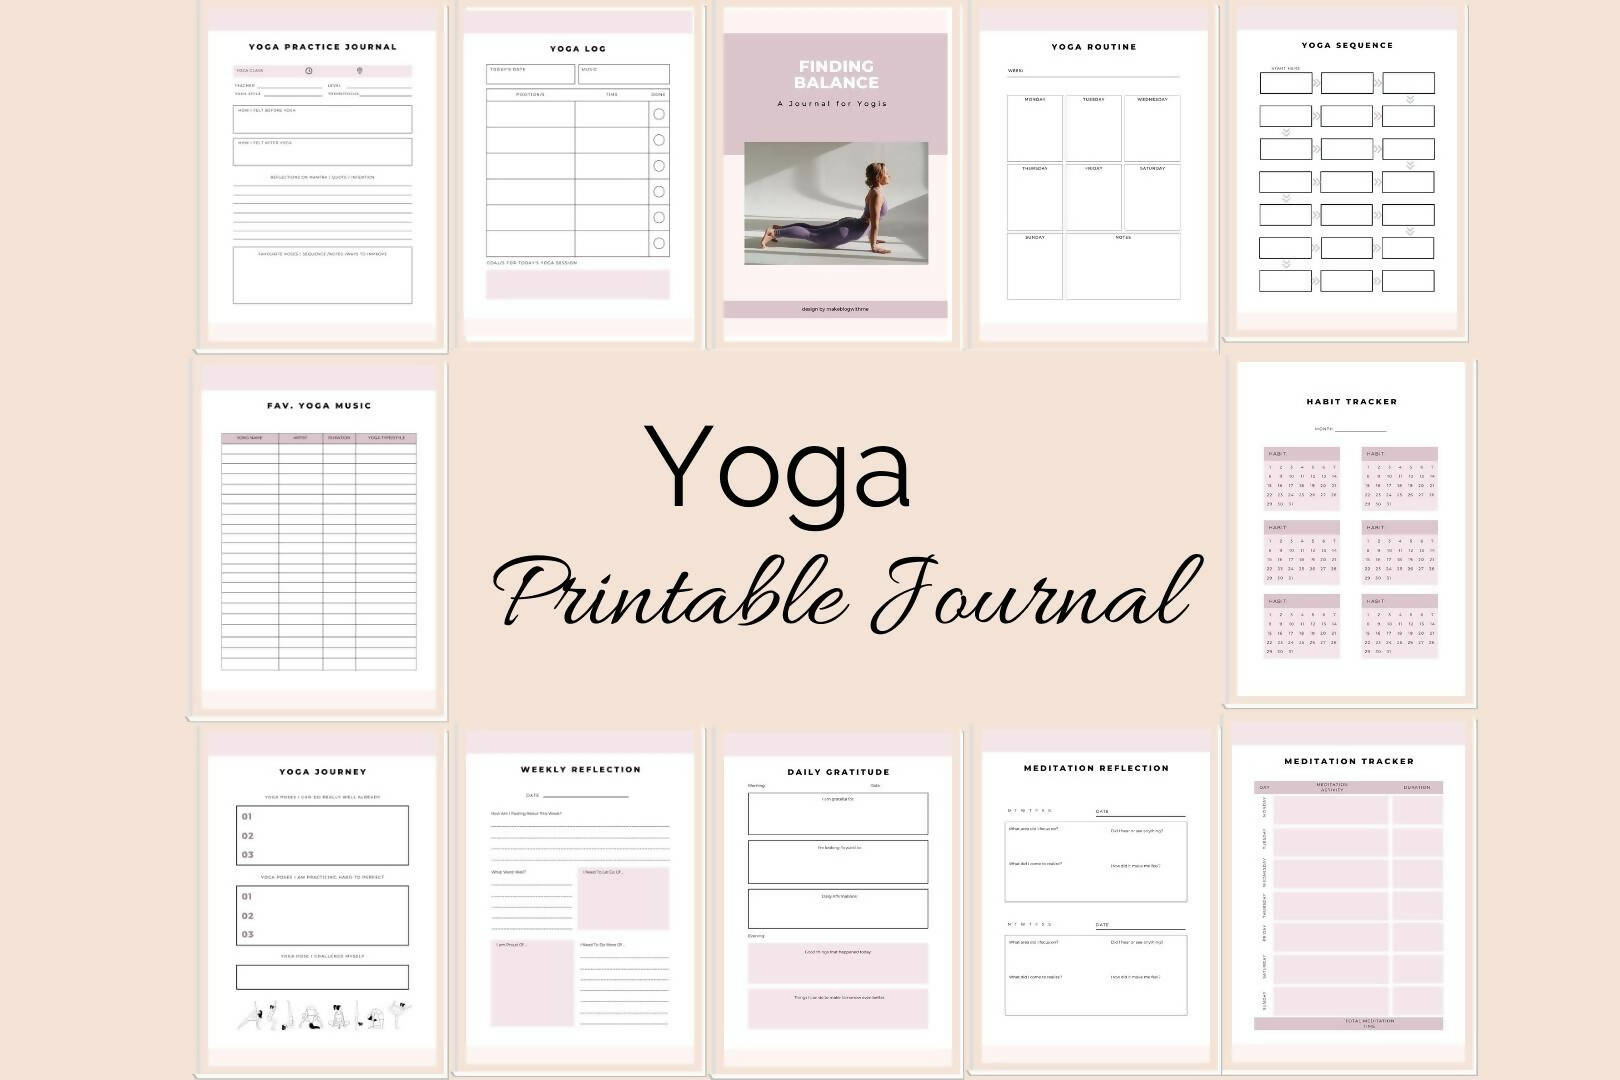 Yoga Journal 